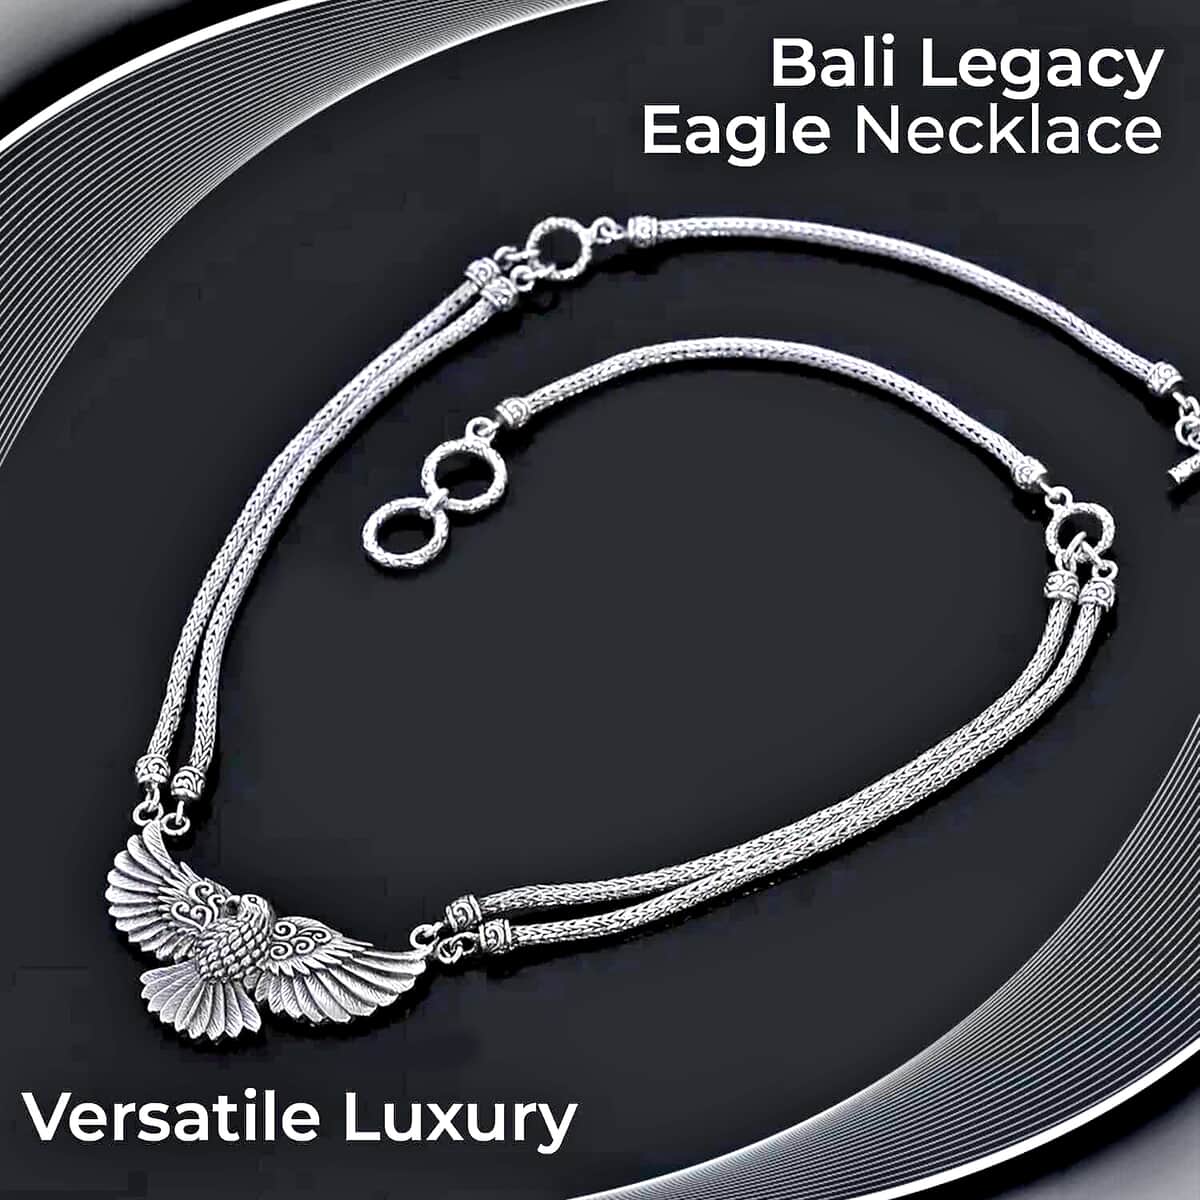 Bali Legacy Eagle Necklace, Sterling Silver Necklace, Toggle Clasp Necklace, 20-21 Inch Necklace 39 Grams image number 1